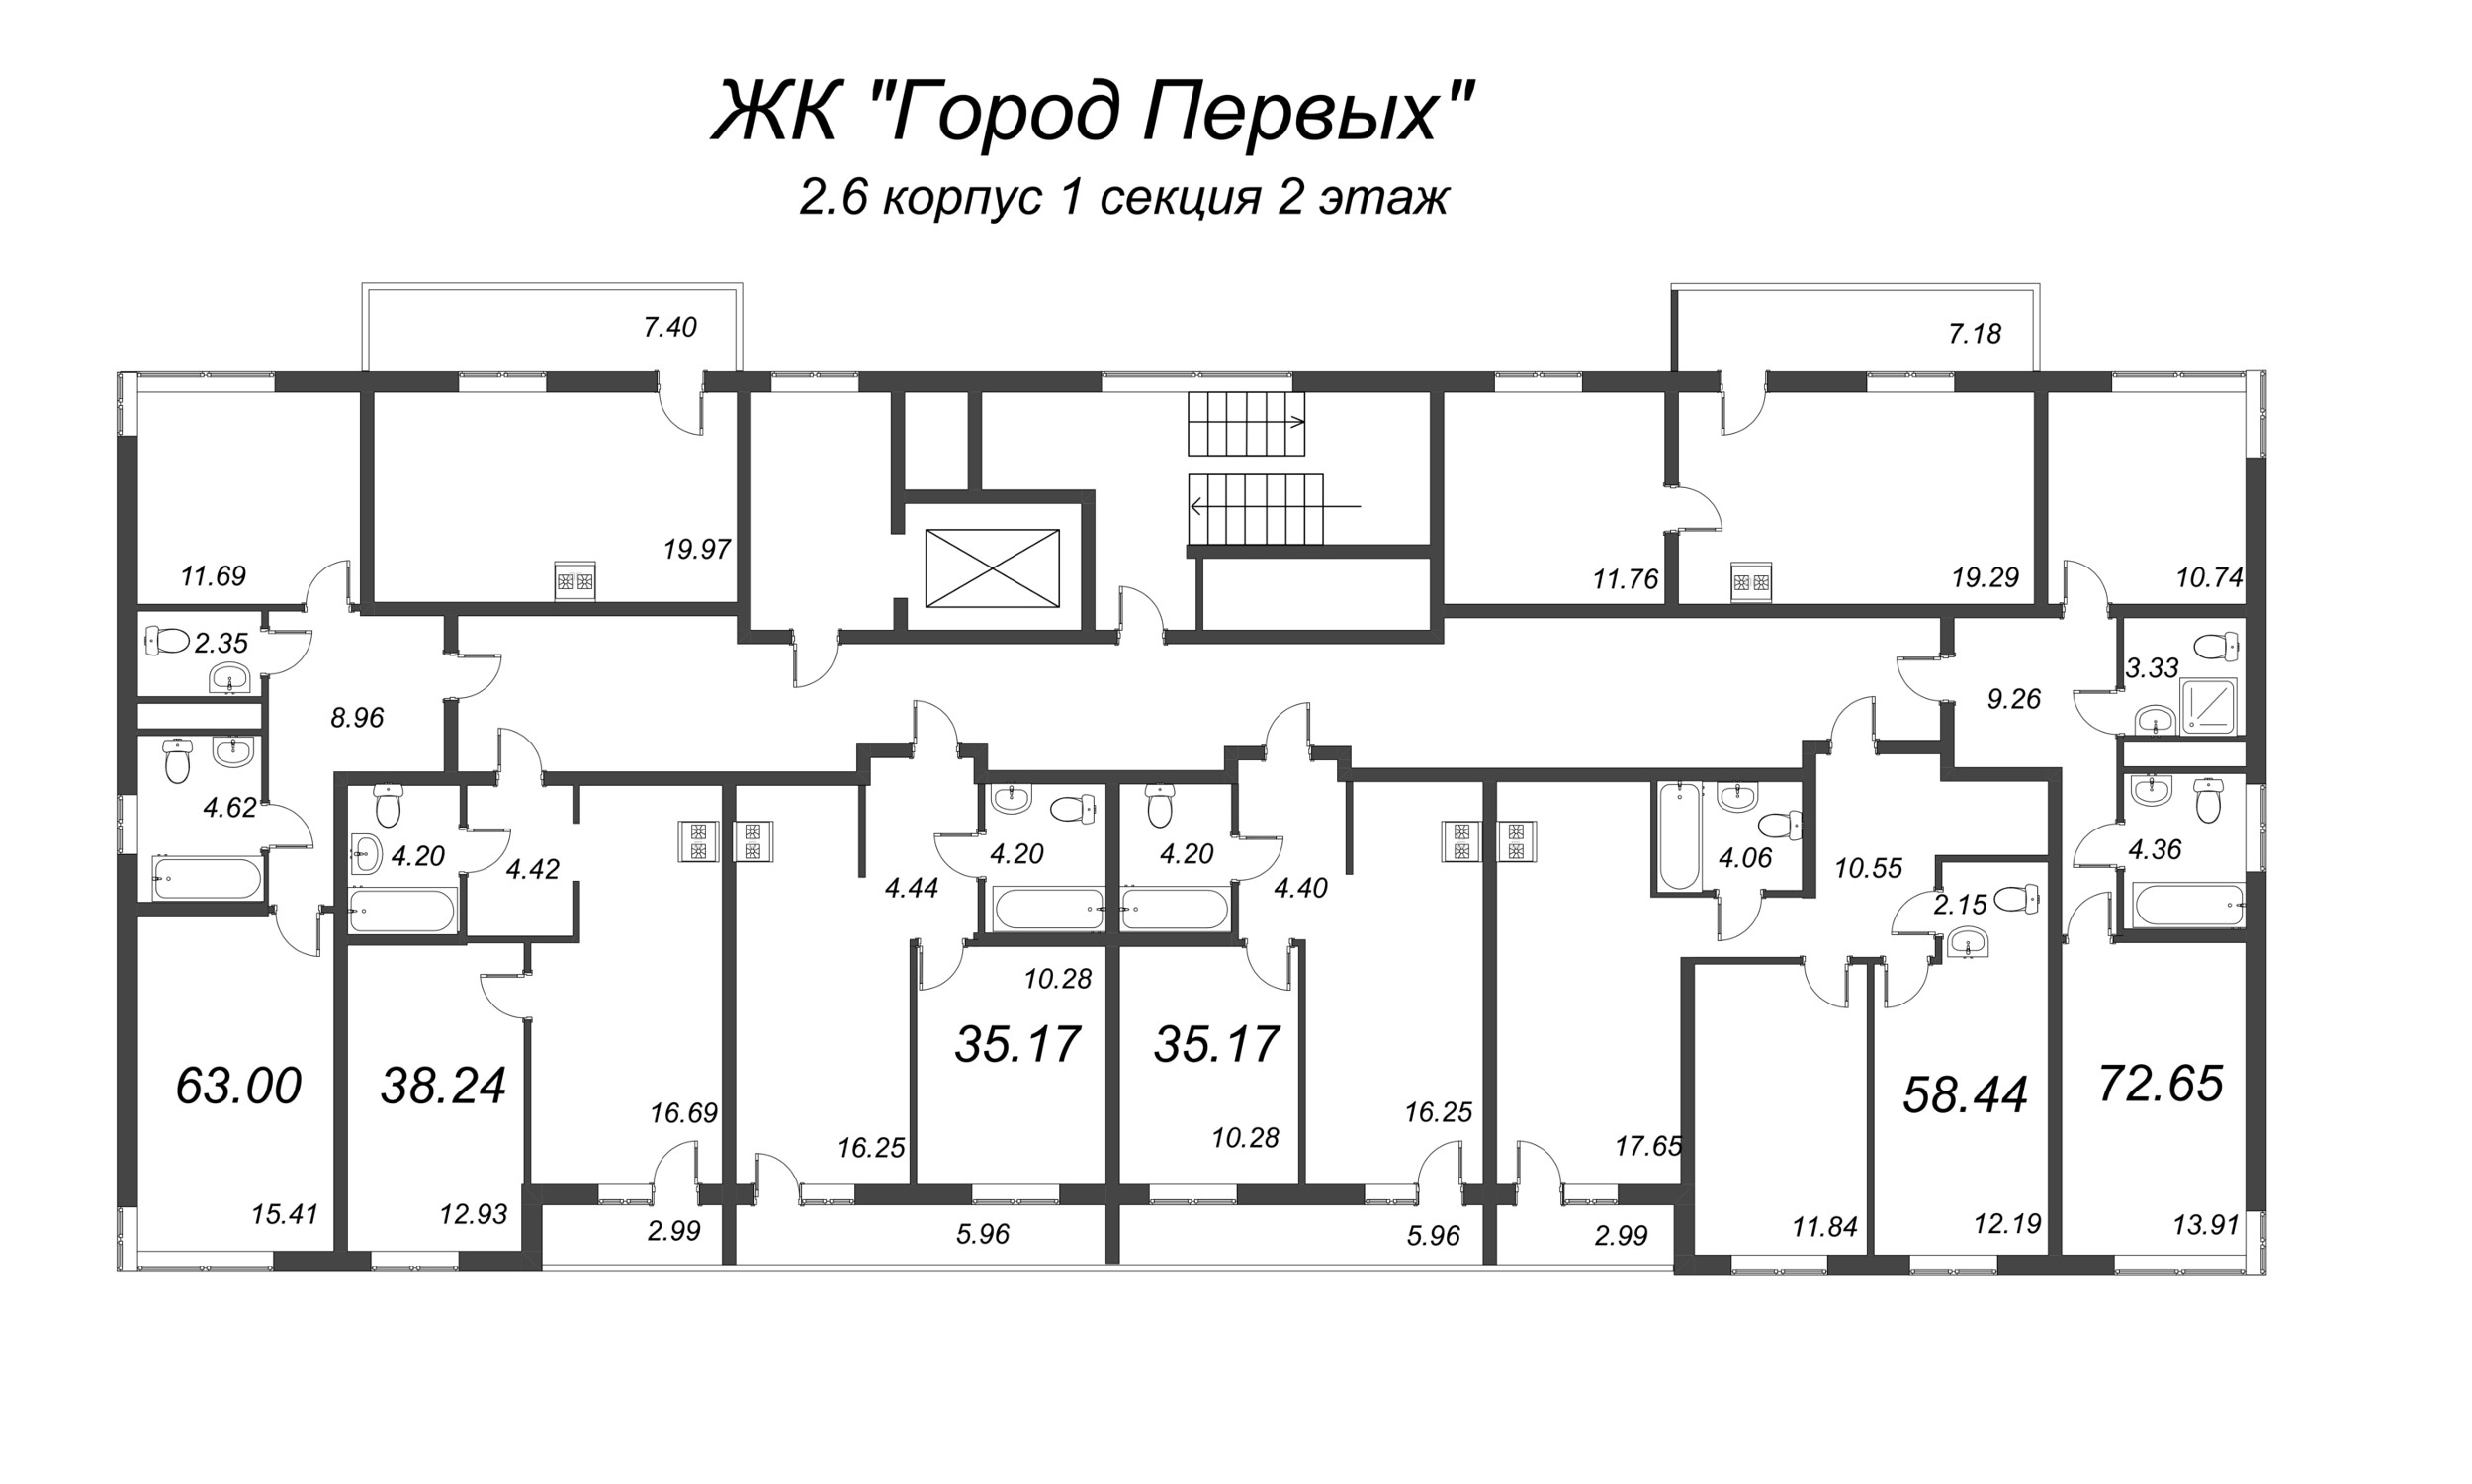 2-комнатная (Евро) квартира, 34.31 м² - планировка этажа